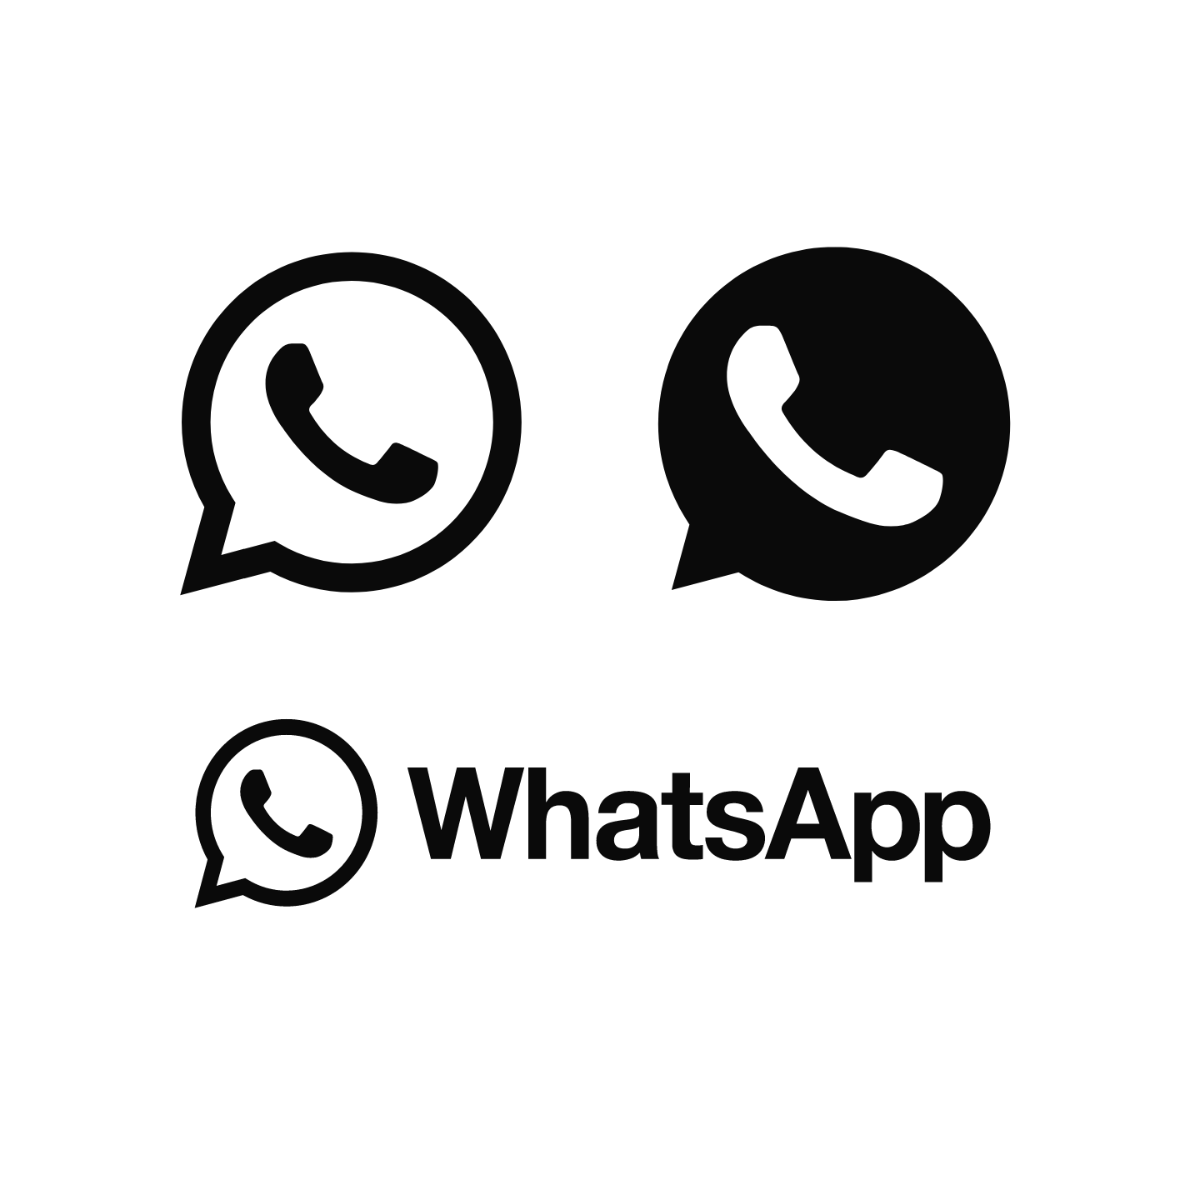 Black and White WhatsApp Logo Vector Template